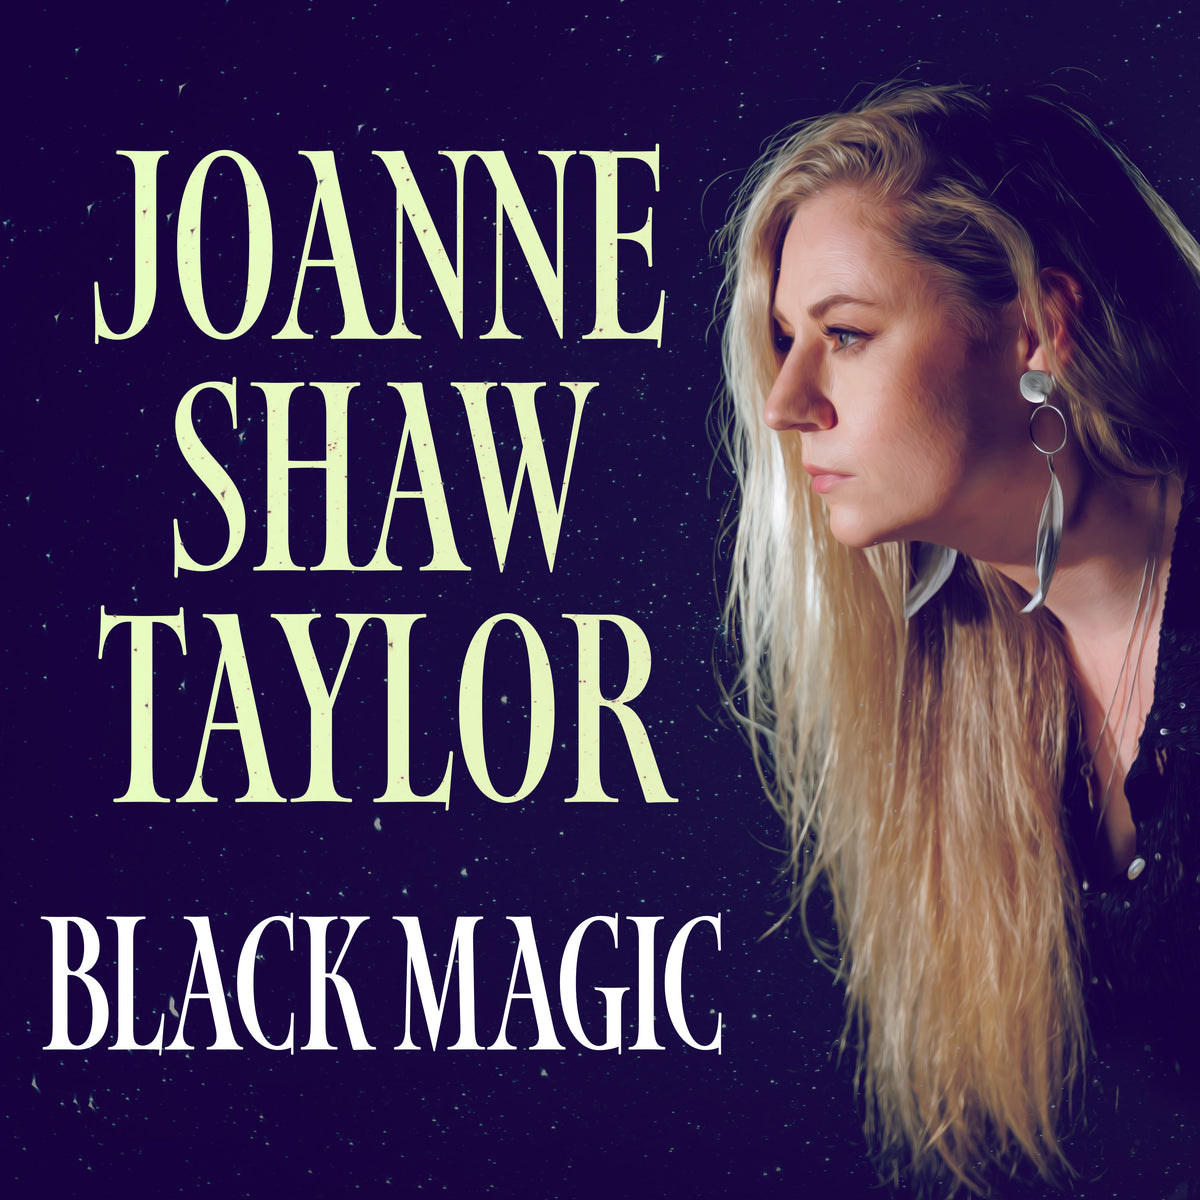 Joanne Shaw Taylor: "Black Magic" - Single